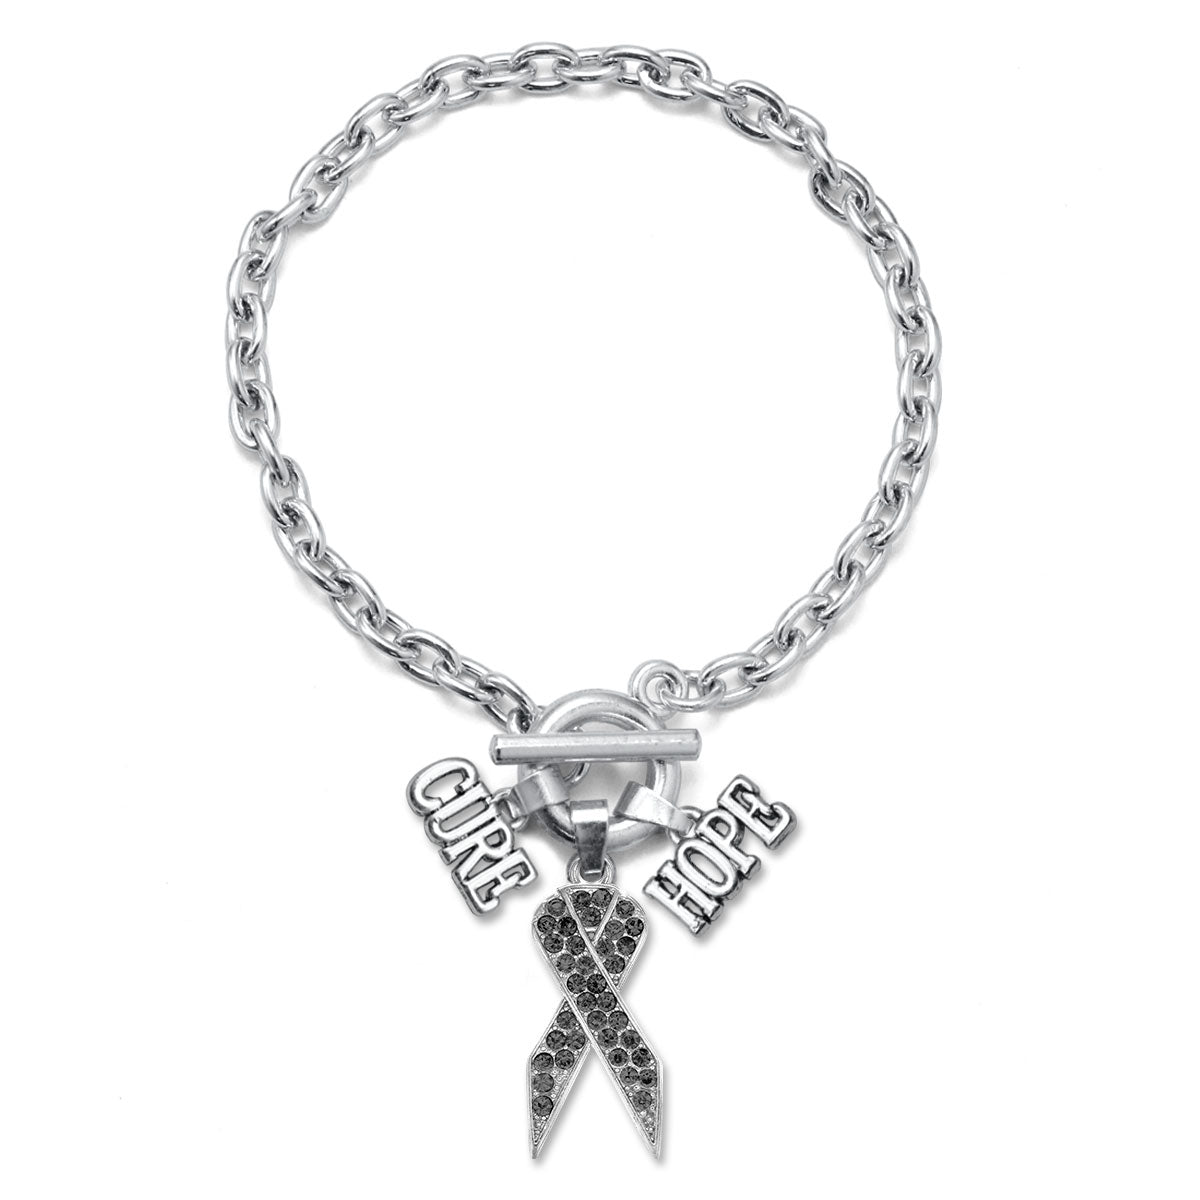 Silver Hope Black Awareness Ribbon Charm Toggle Bracelet